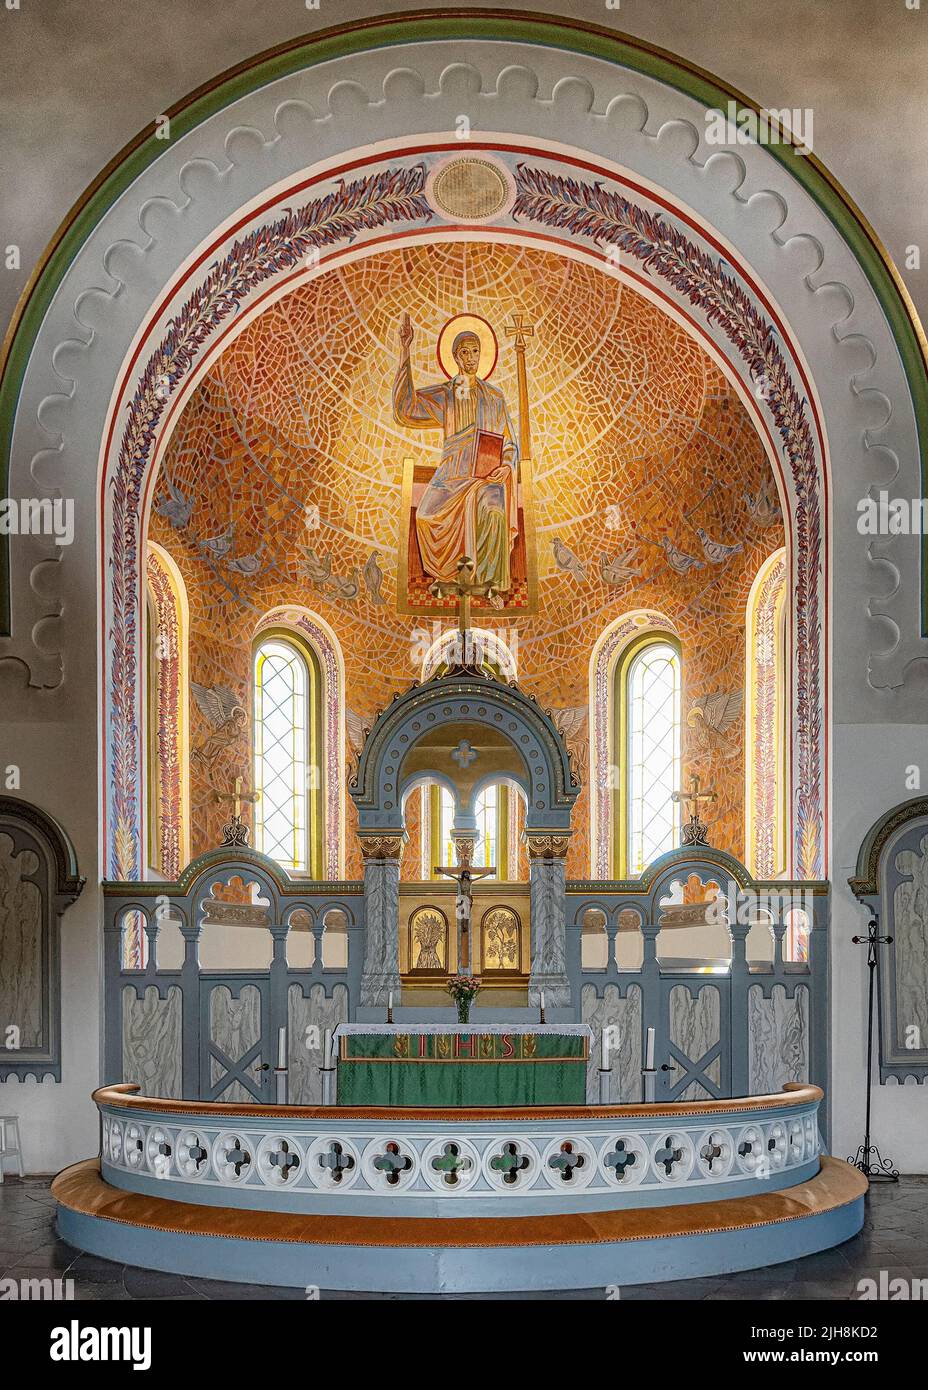 The interior of the church built in 1868-1872 in Blekinge, Sweden Stock Photo